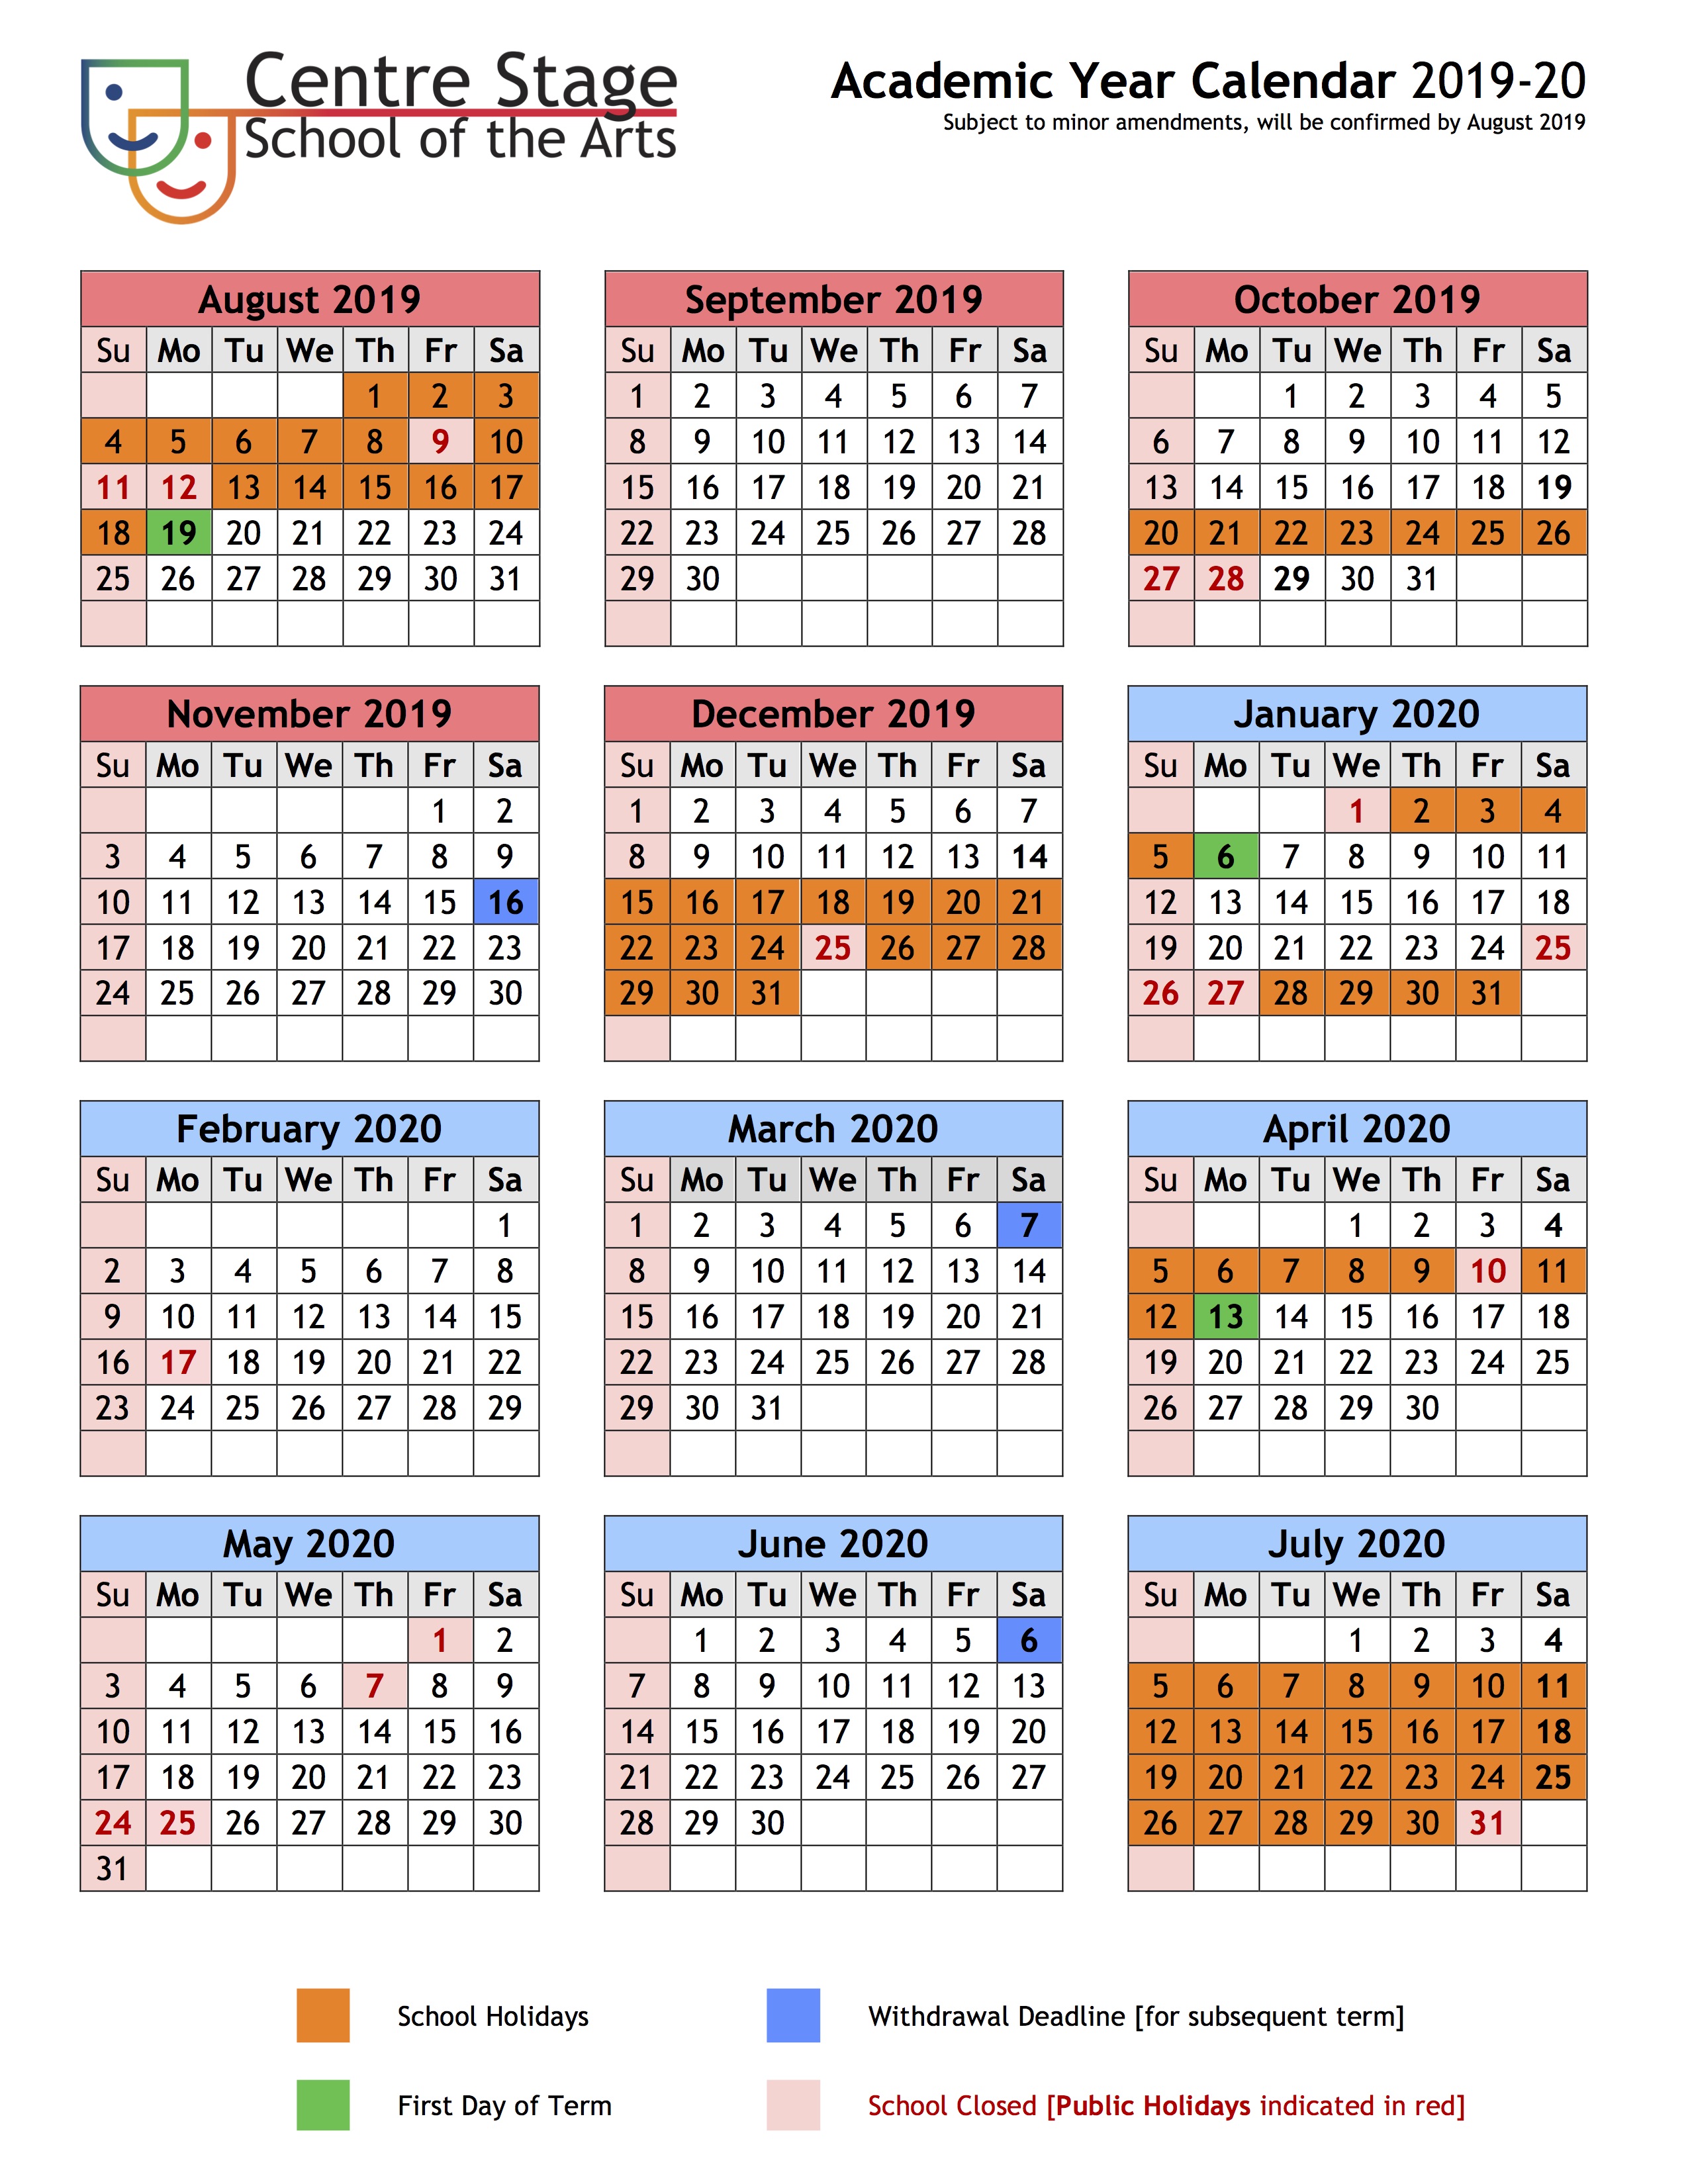 Singapore Calendar 2020 With School Holidays Paul Smith